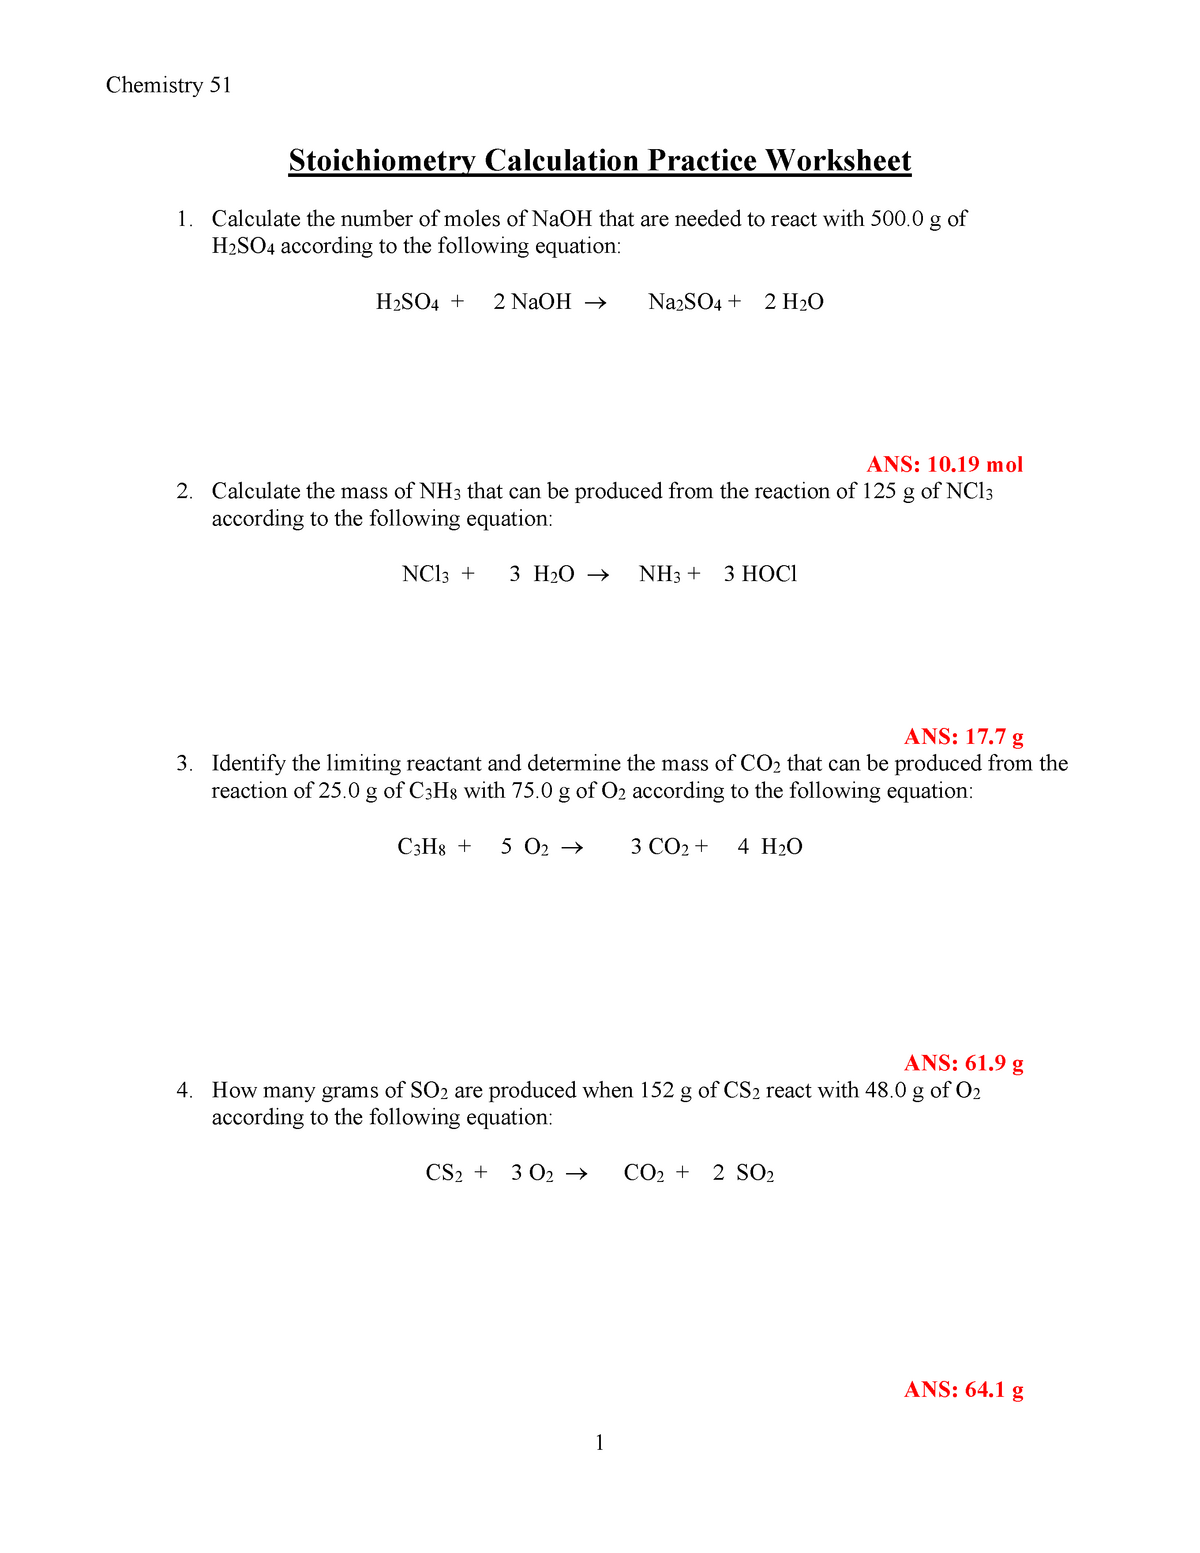 Stoichiometry Worksheet - Chemistry 22 22 Stoichiometry Calculation Inside Stoichiometry Problems Worksheet Answers